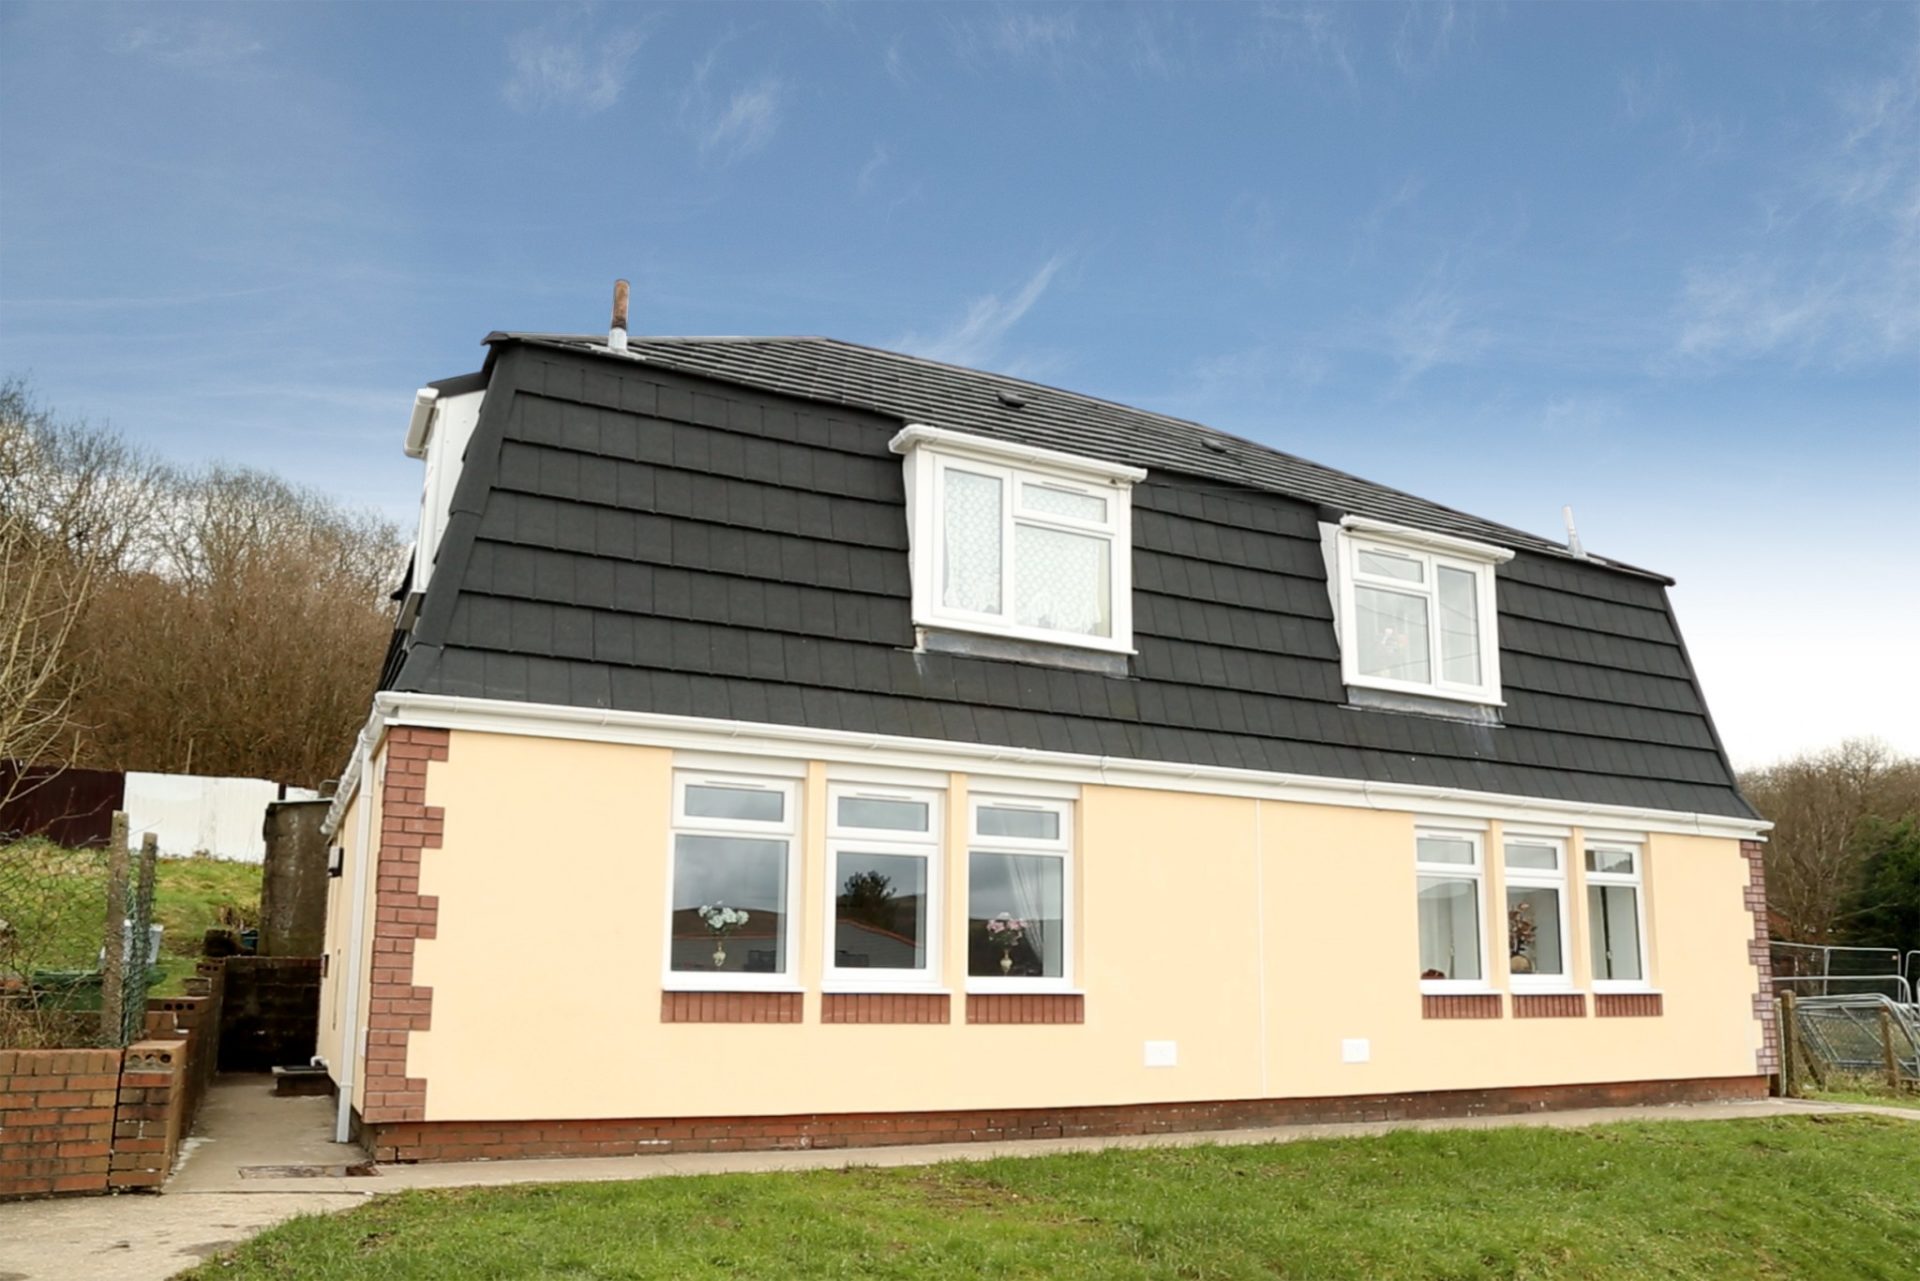 Rockwool helps to upgrade Cornish homes